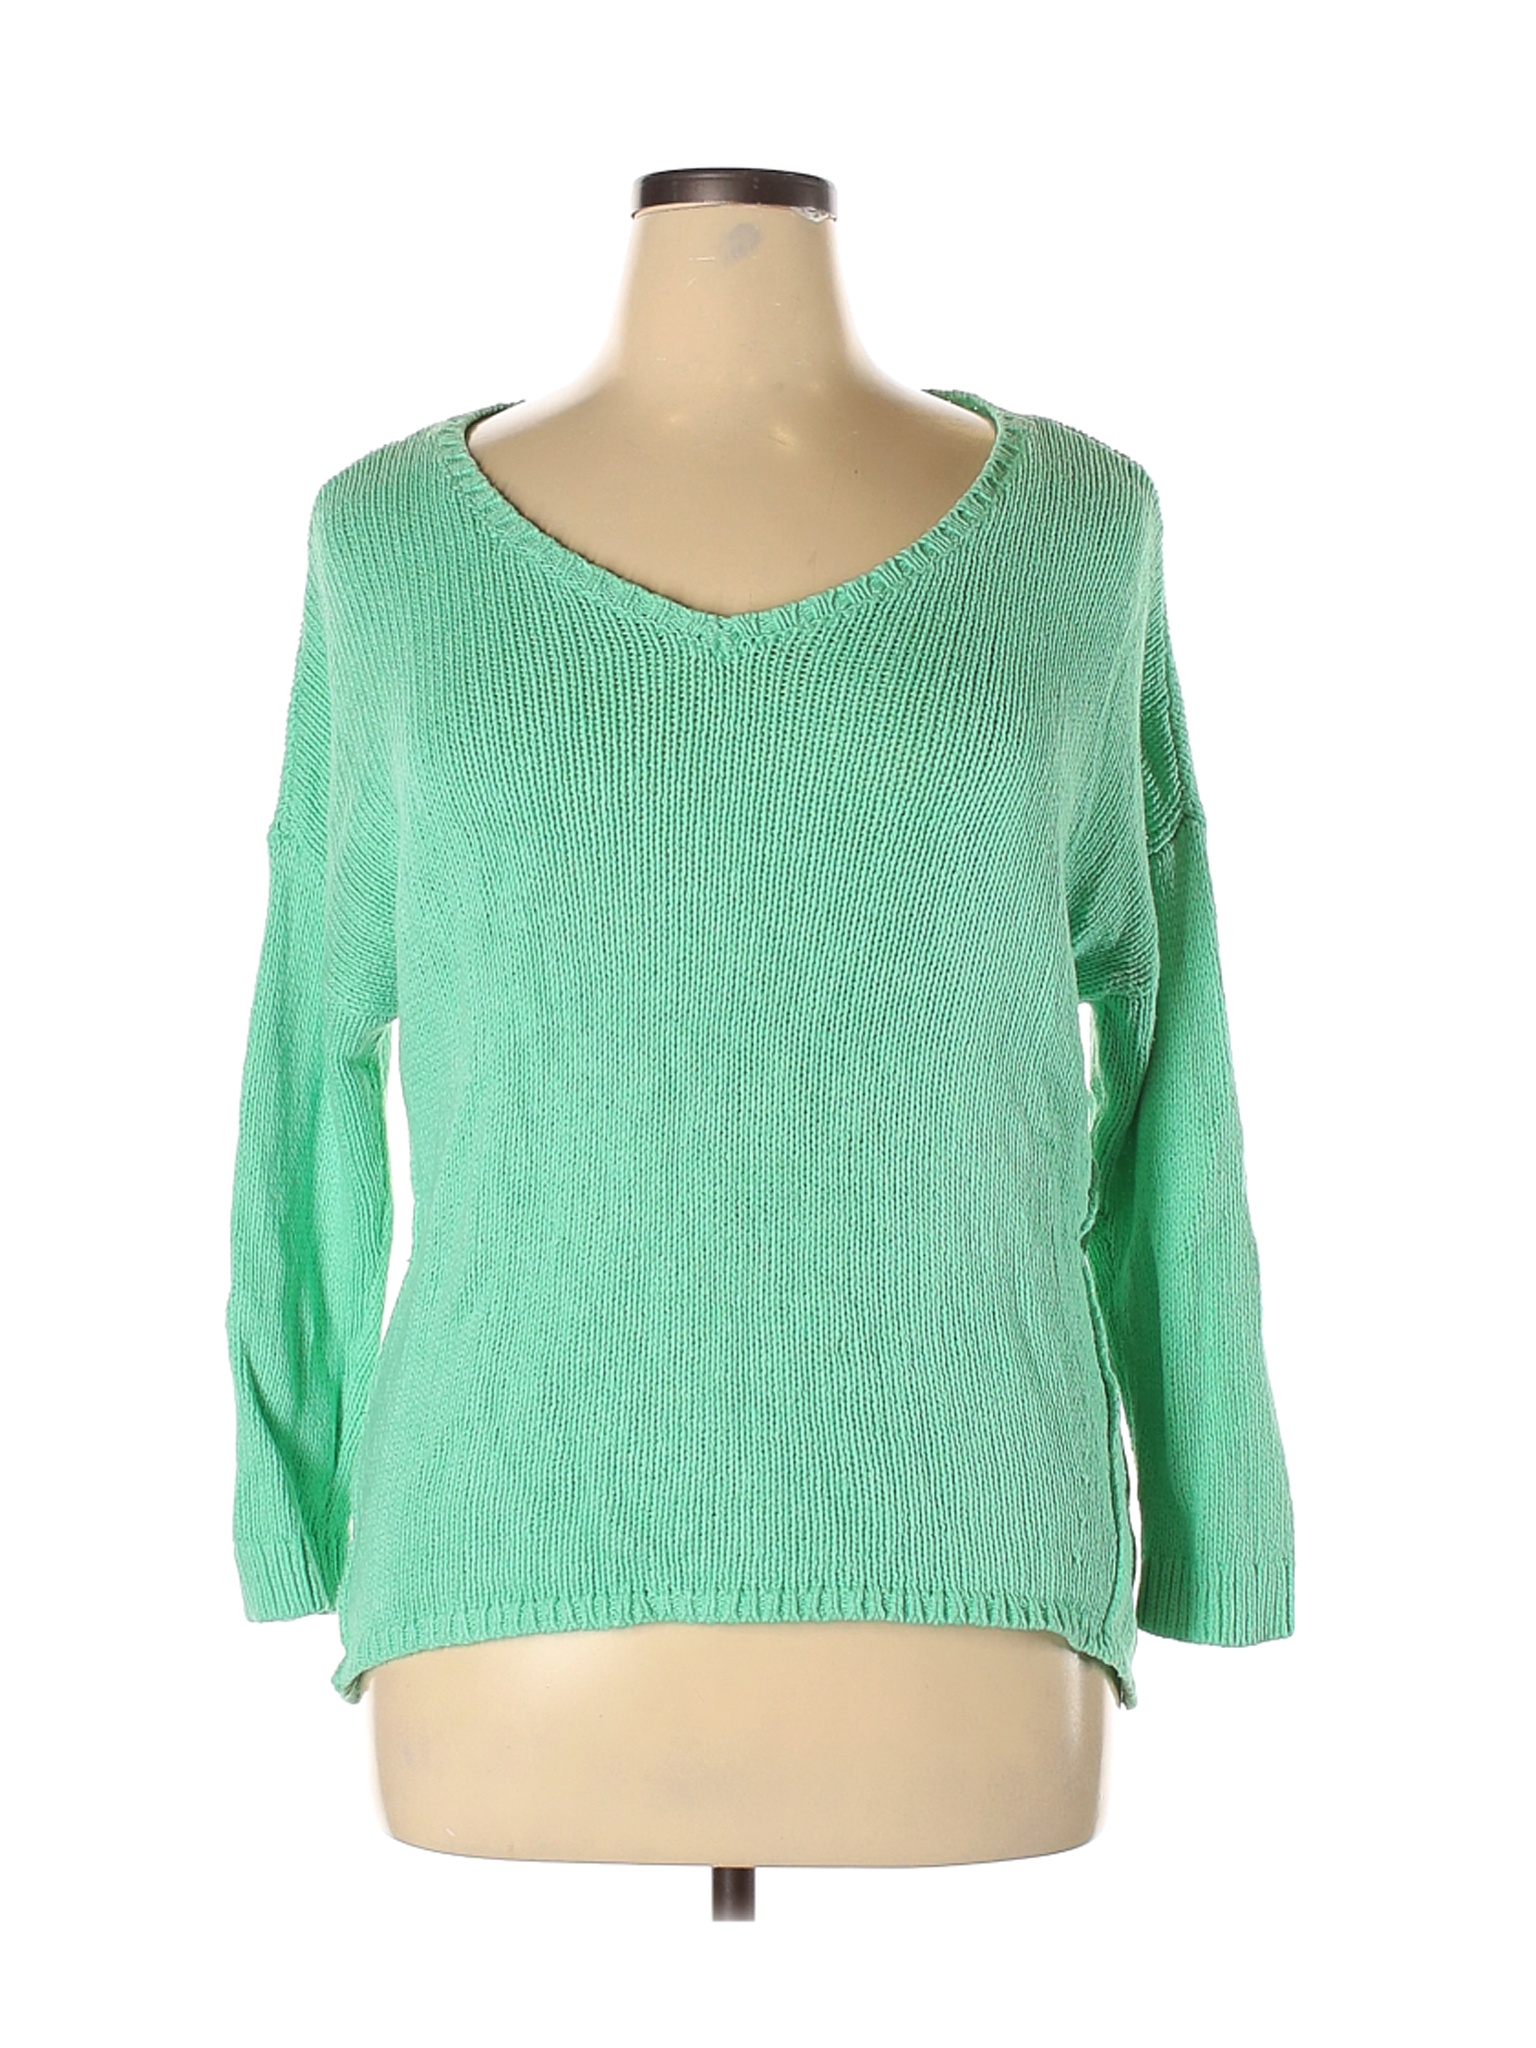 Banana Republic Factory Store Women Green Pullover Sweater XL | eBay